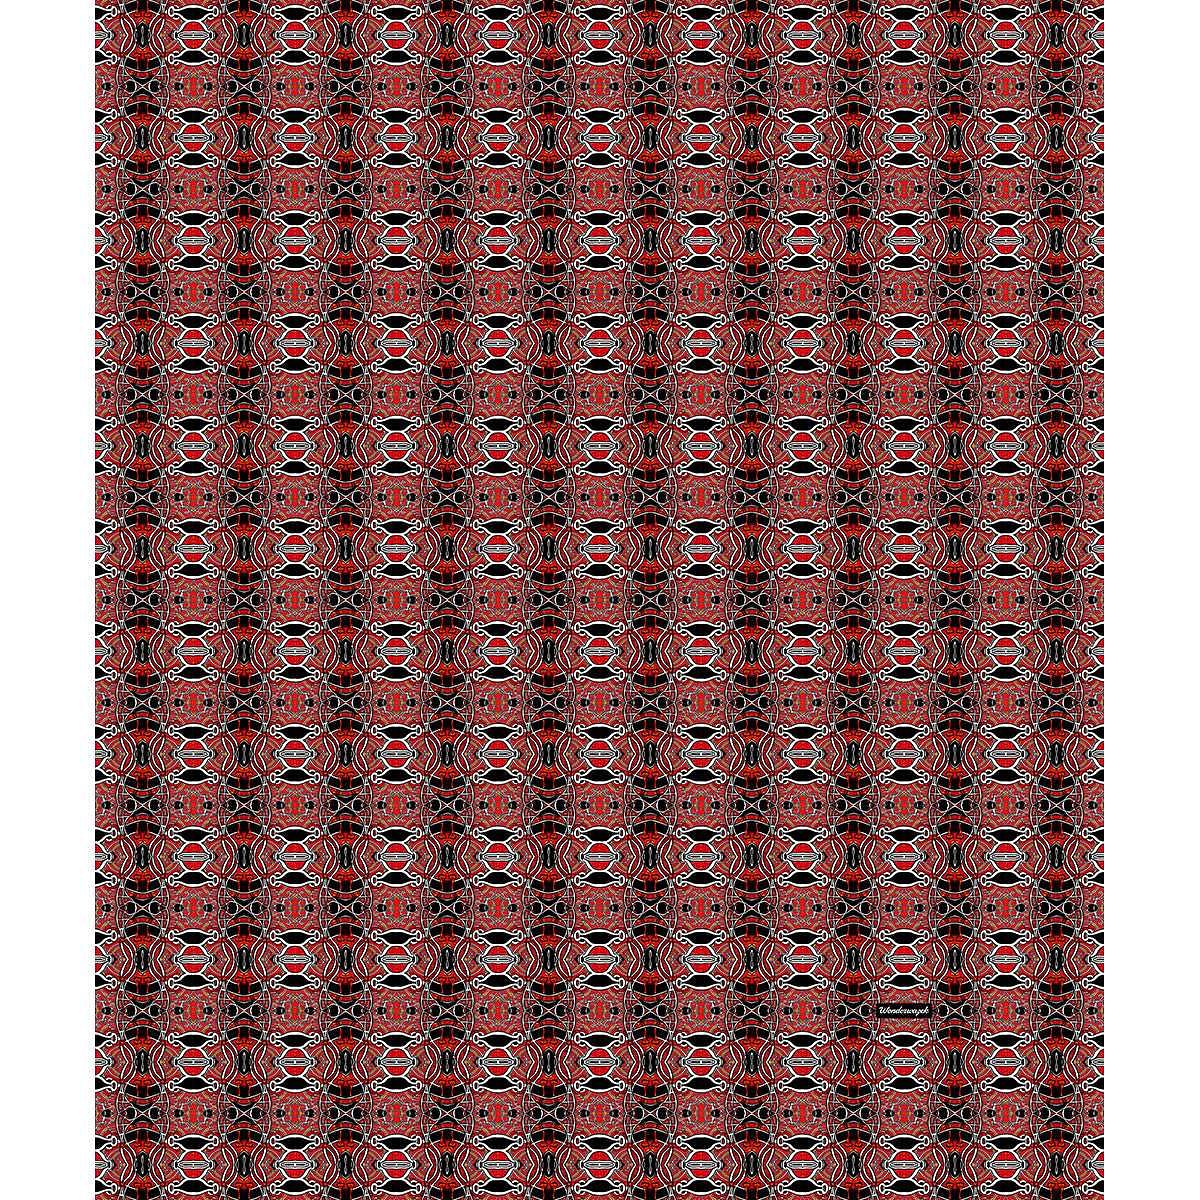 Decke • Zirkus – Variation 1, rot, schwarz, weiß - Wonderwazek